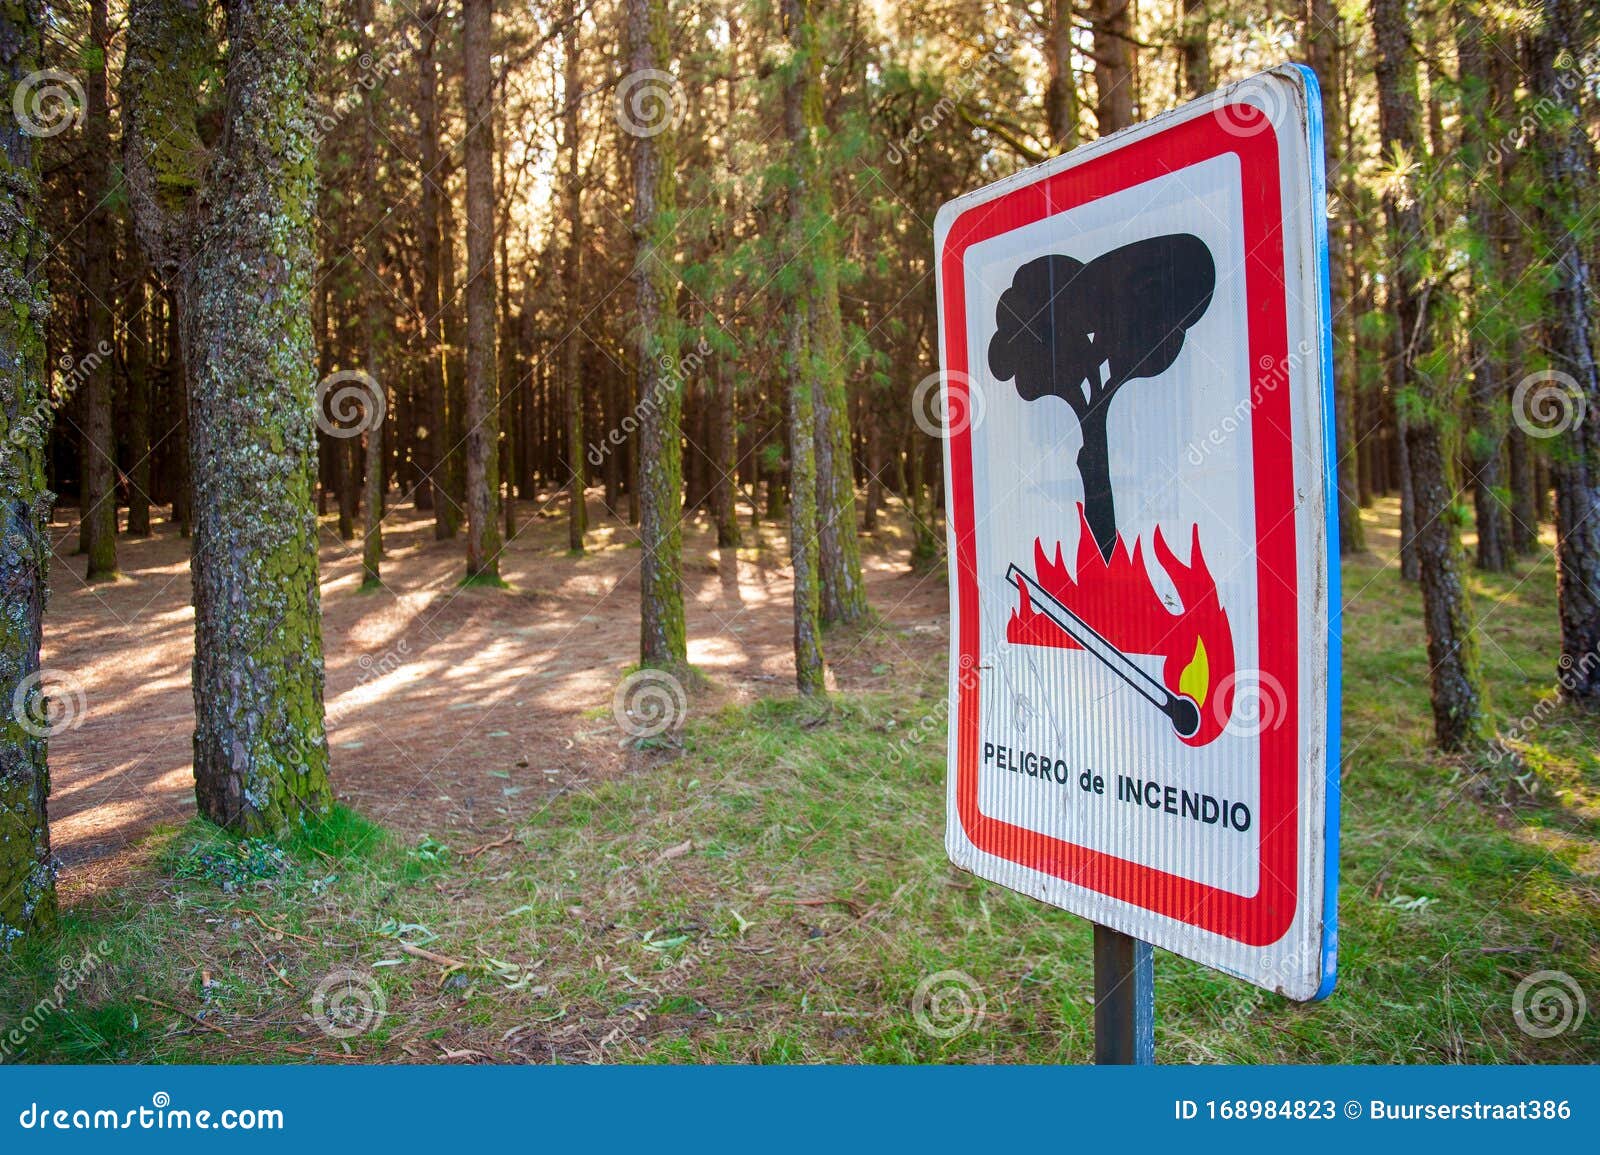 warning sign for bushfire